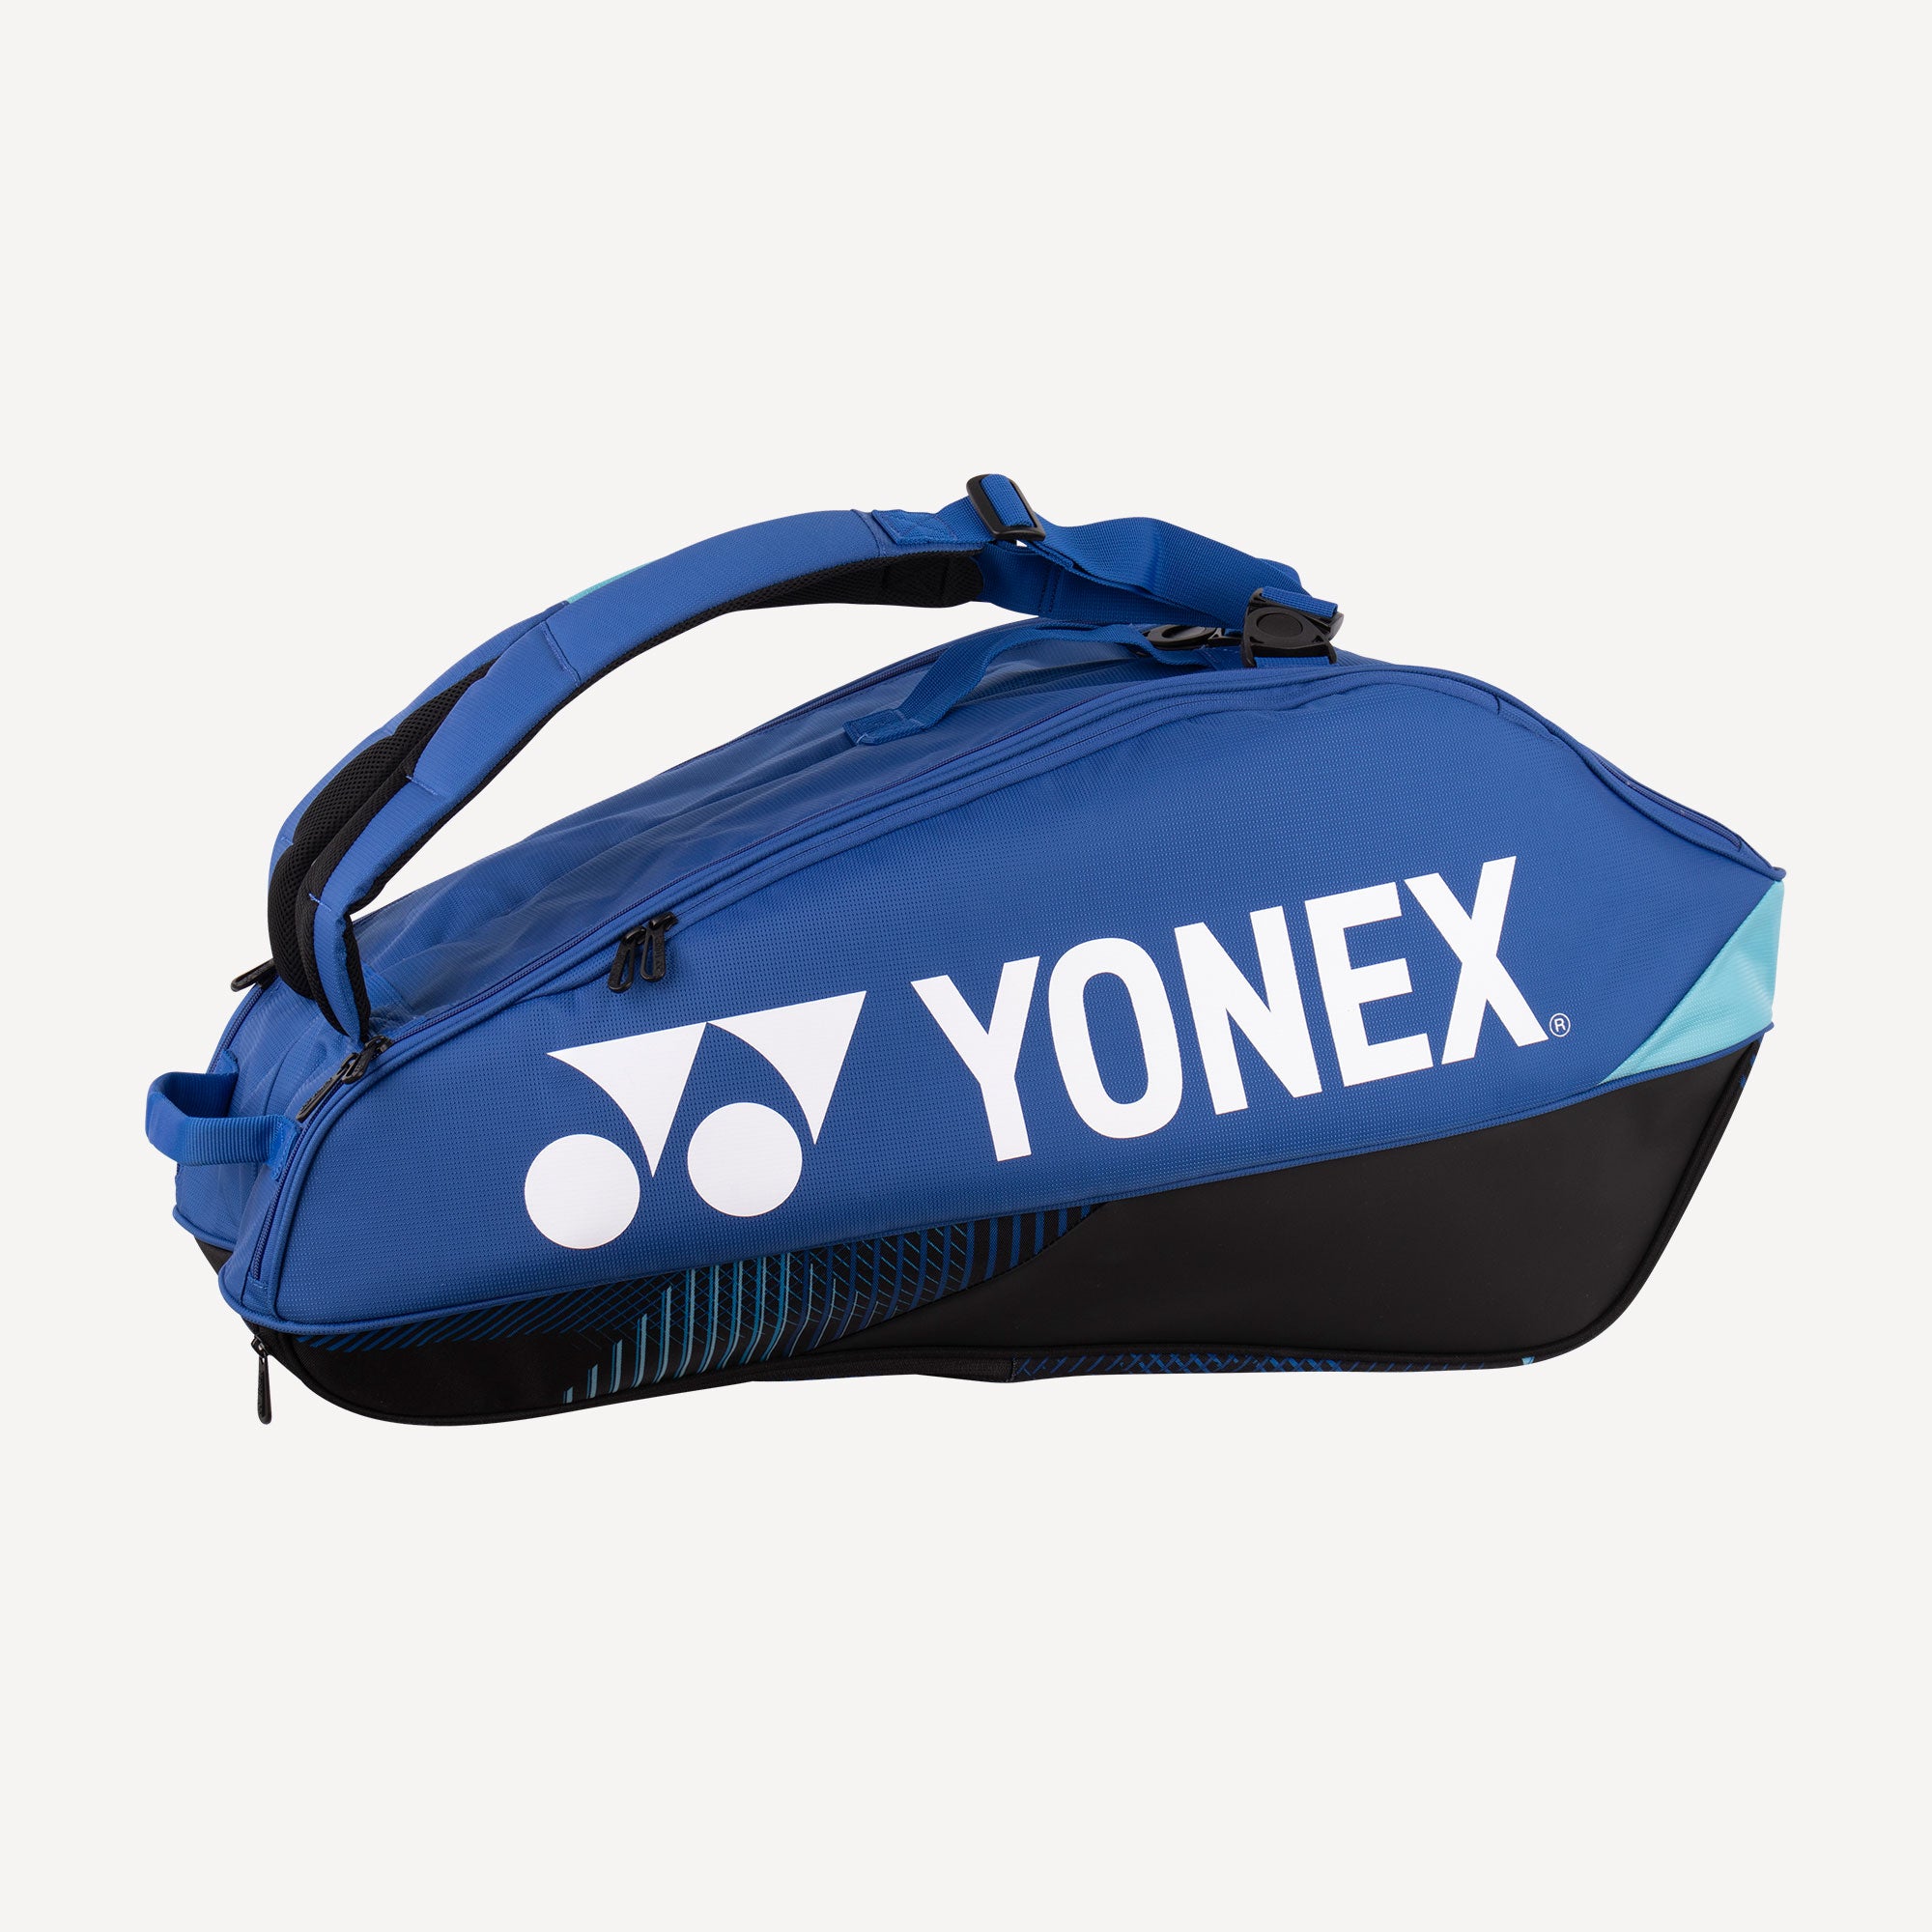 Yonex Pro 6 Racket Tennis Bag - Blue (1)